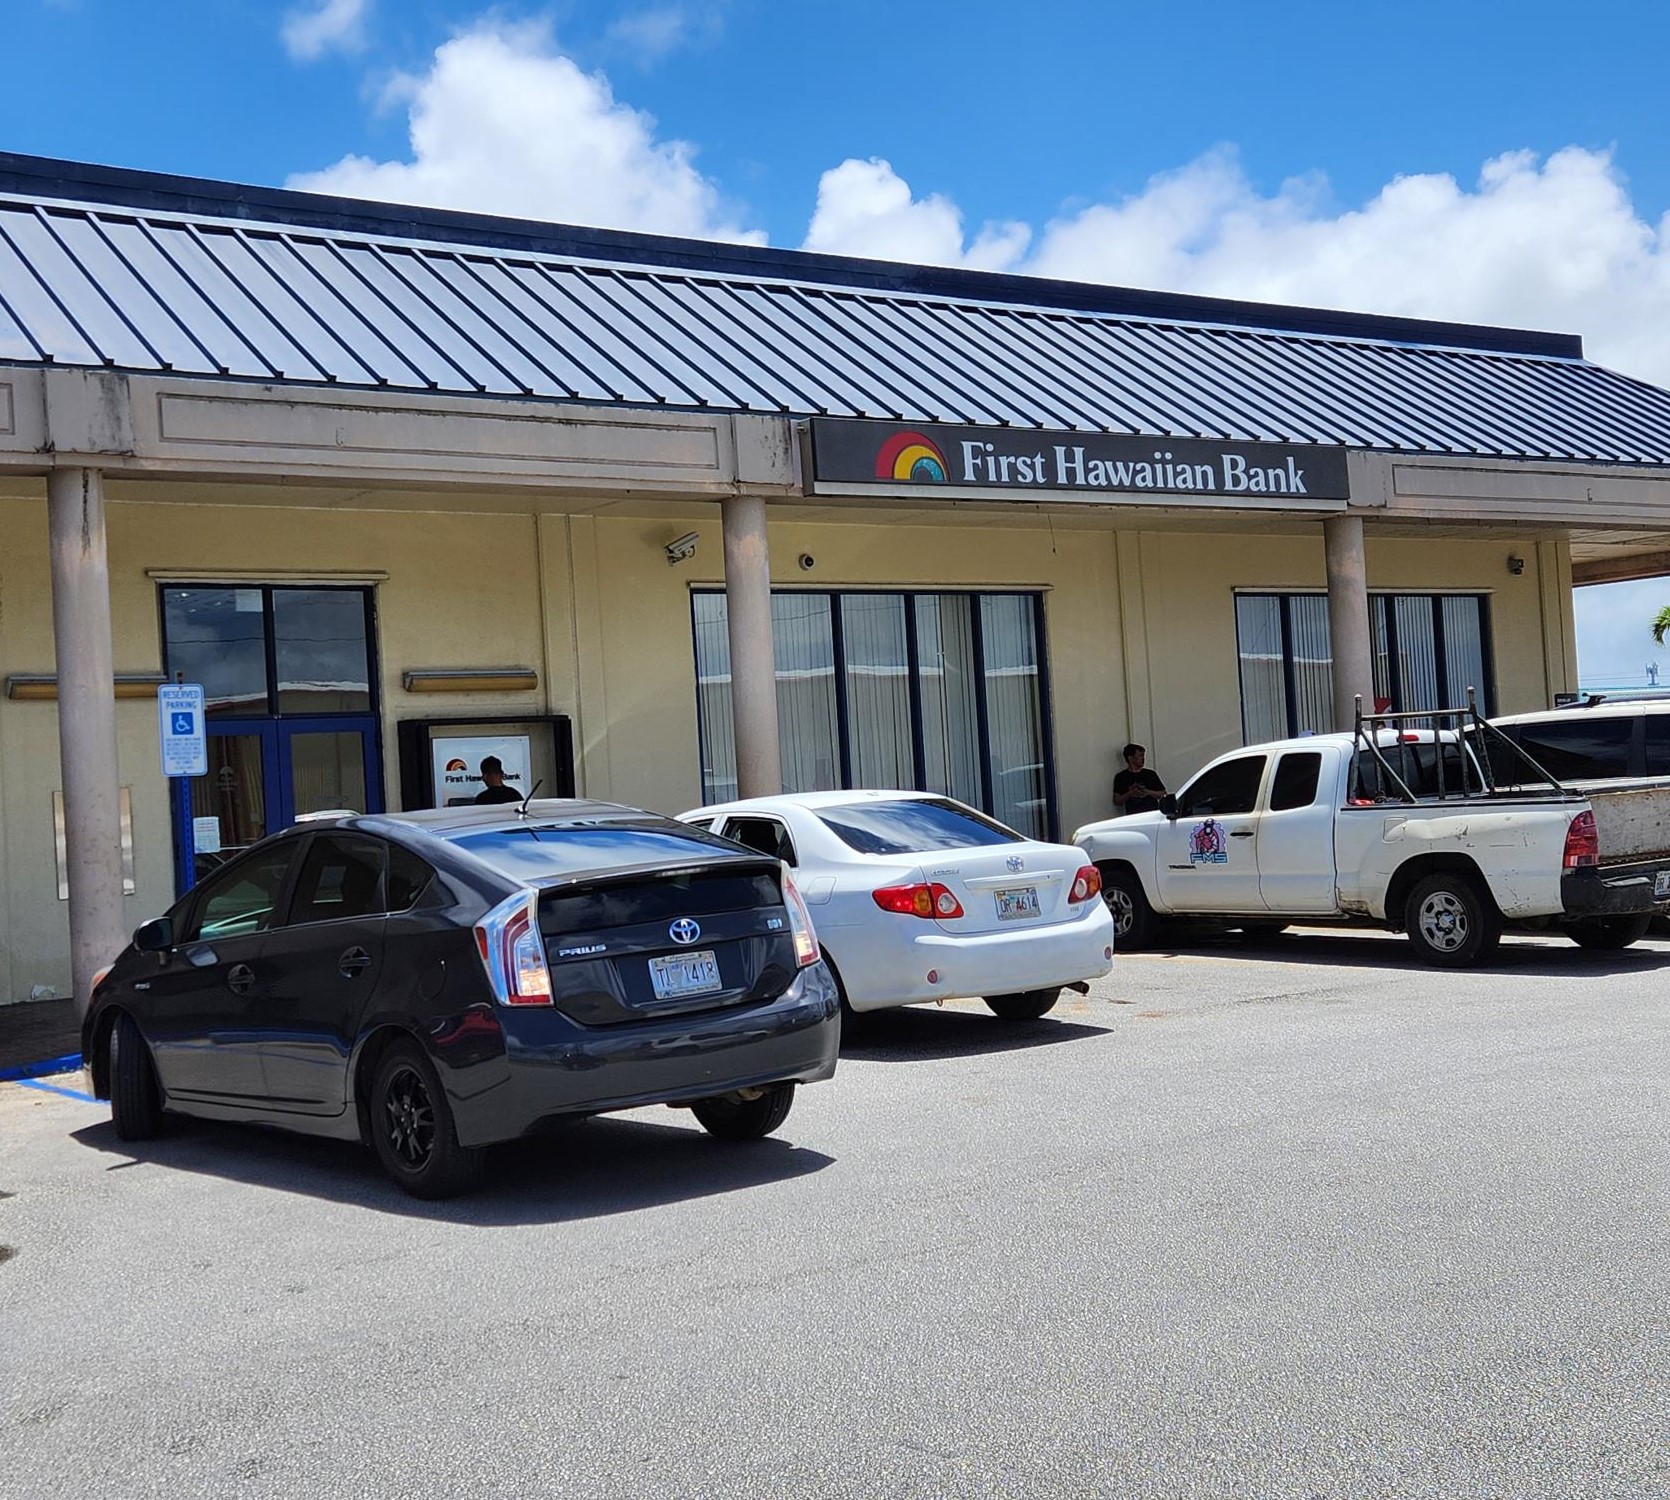 Bank to close branch in Saipan